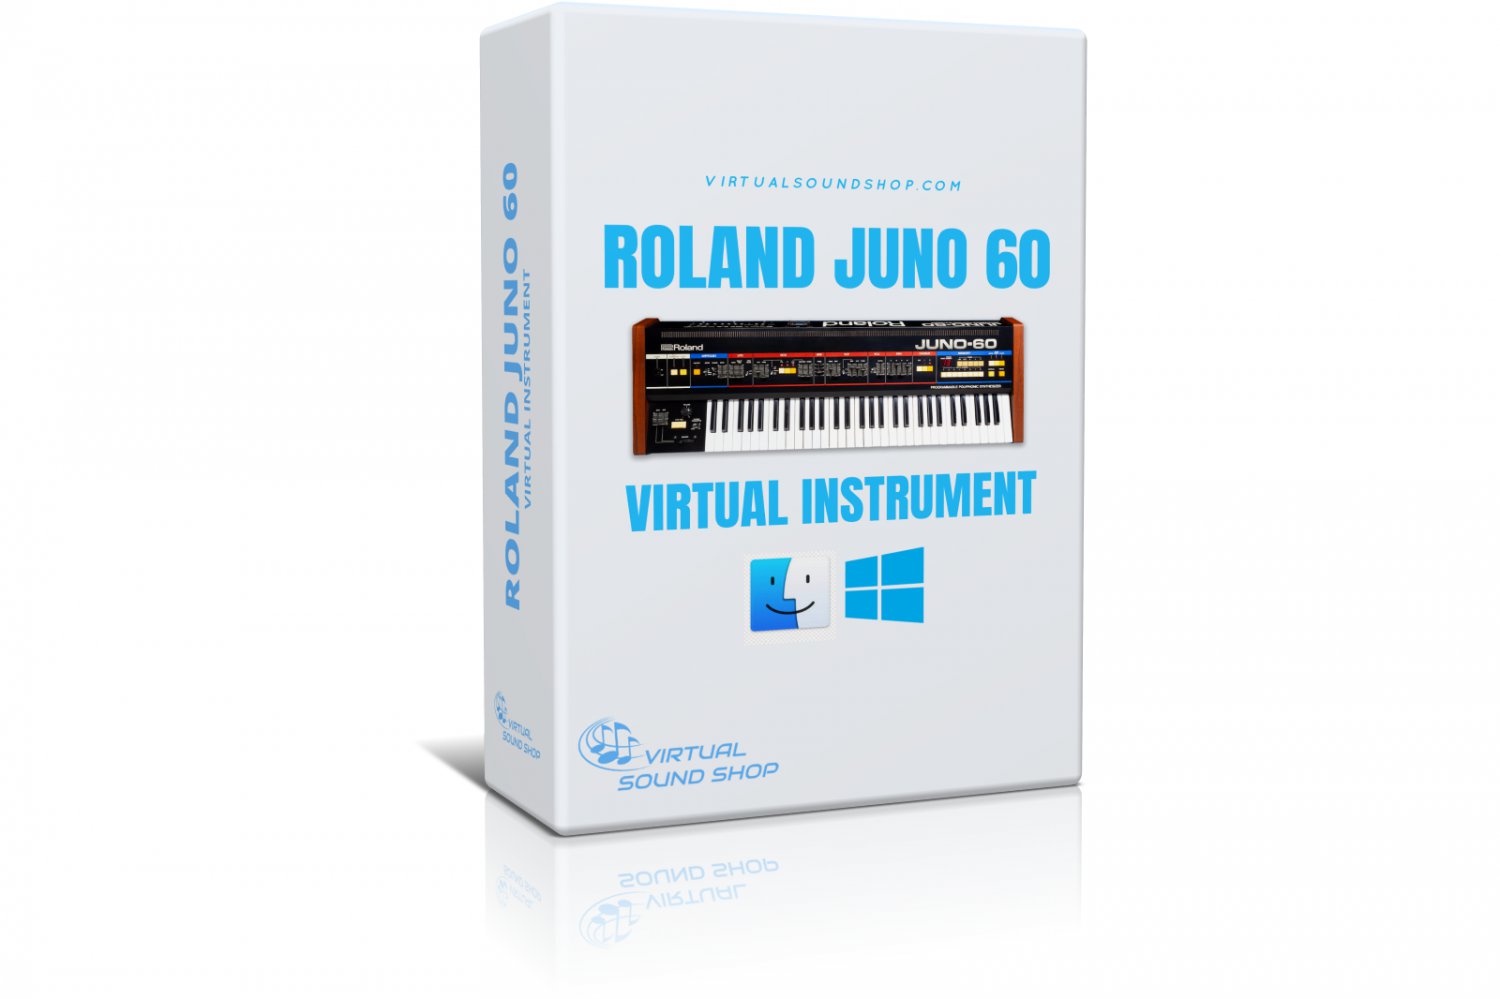 Roland Juno 60 VST Virtual Instrument Software | Windows PC, Mac OSX